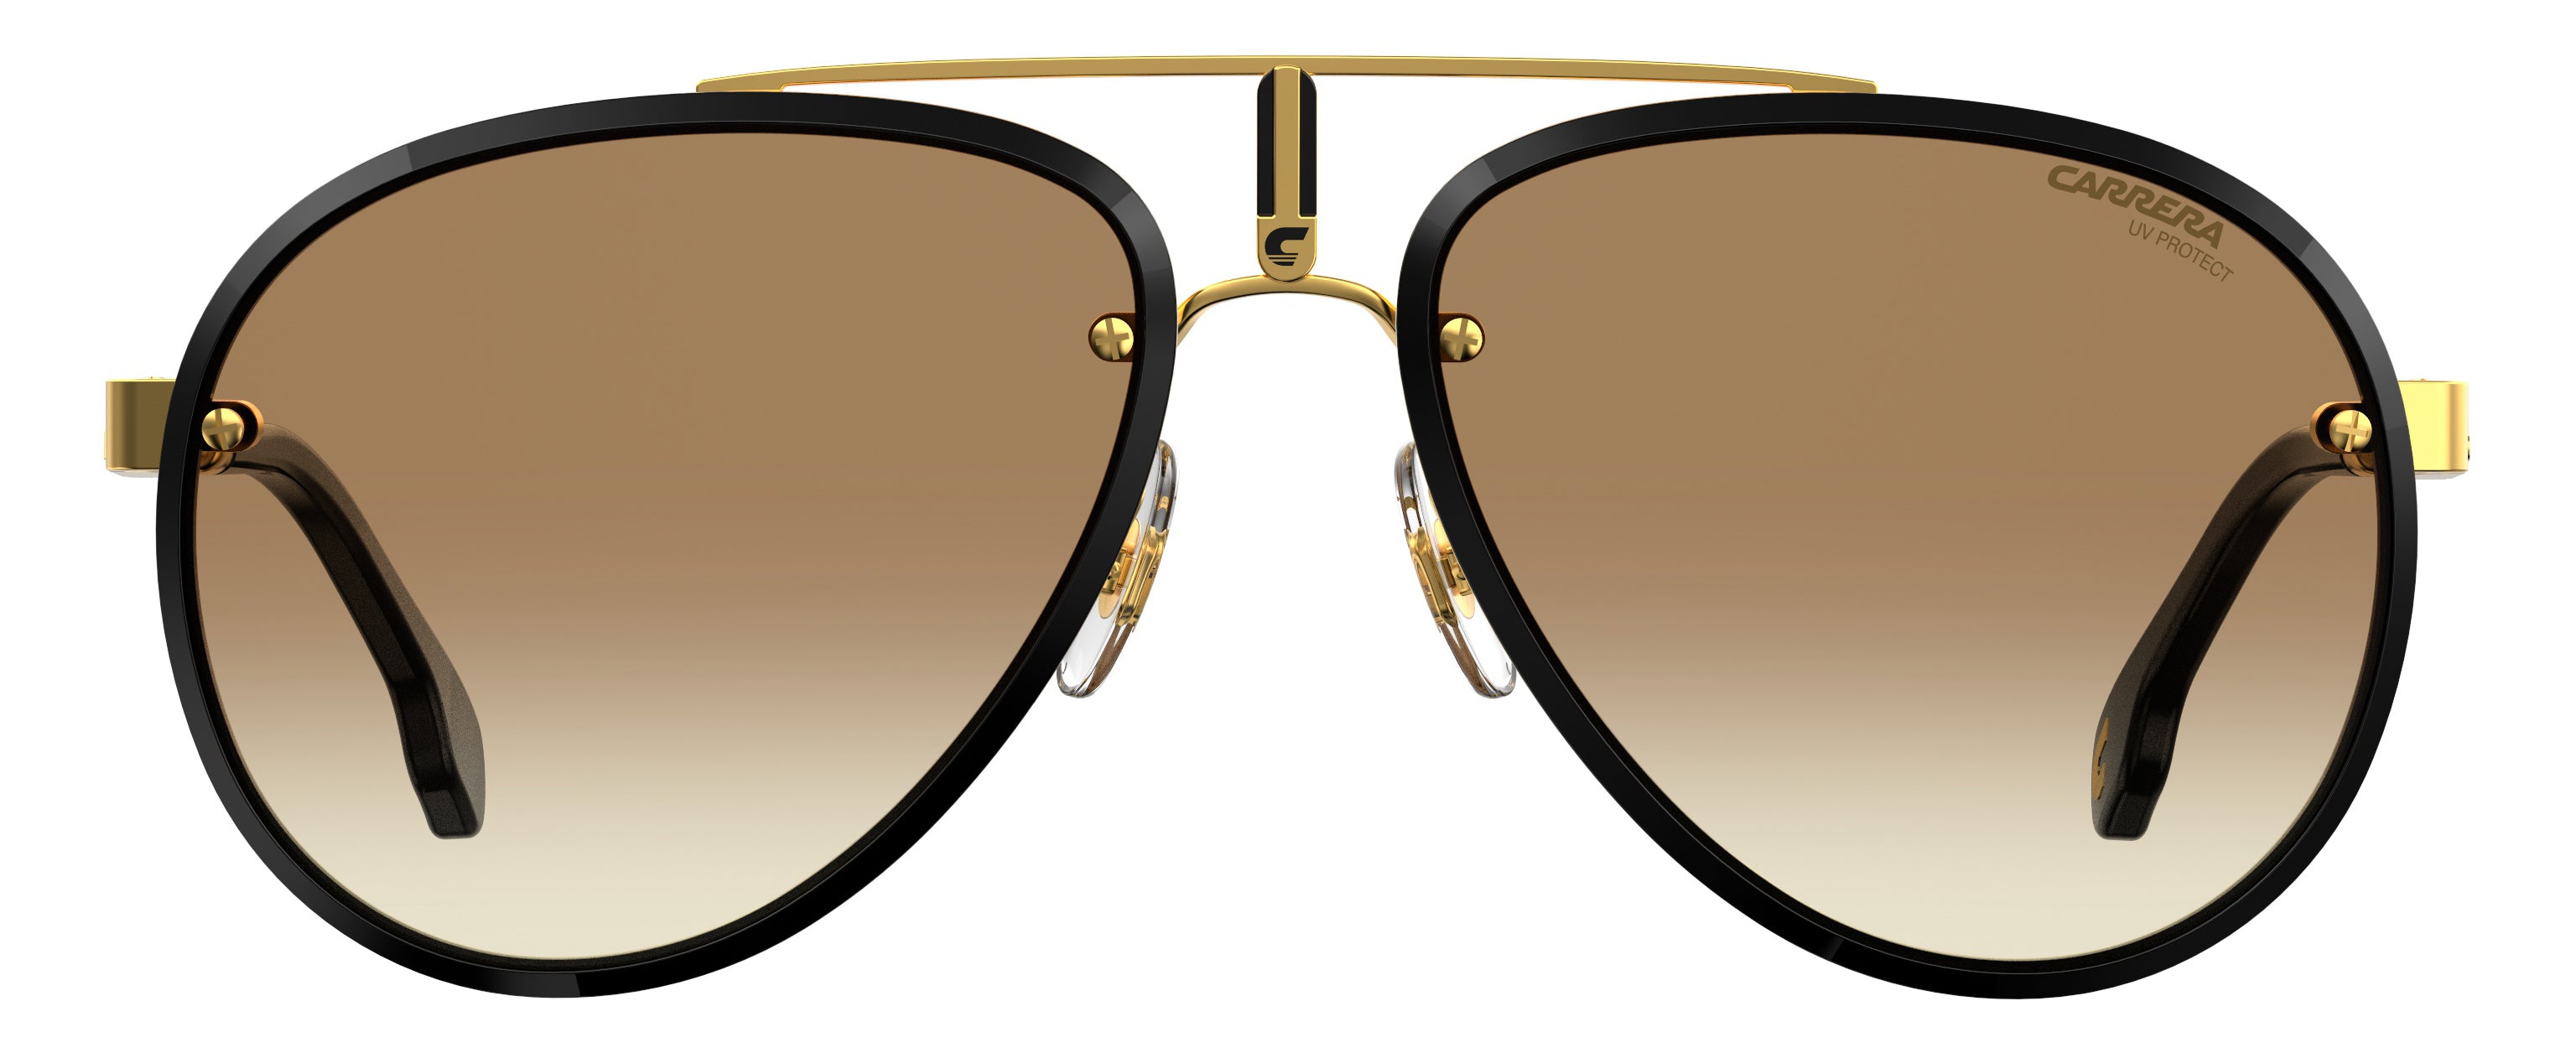 Carrera Glory Aviator Men's Sunglasses, Newest Style - Black/Brown